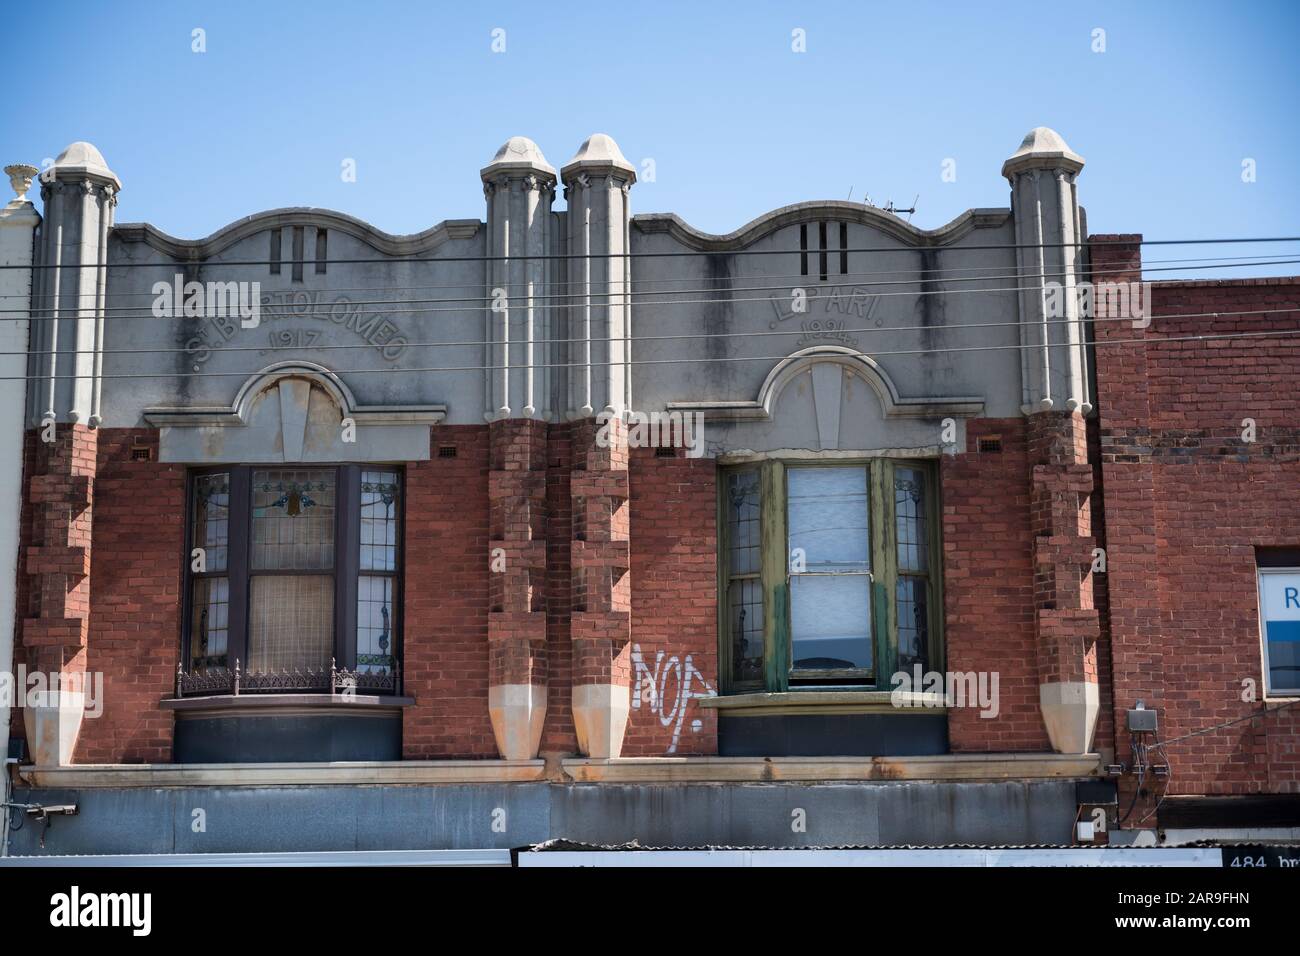 Section of an old 2 storey building facing onto Bridge Road, noRichmond, Victoria, Australia. Stock Photo